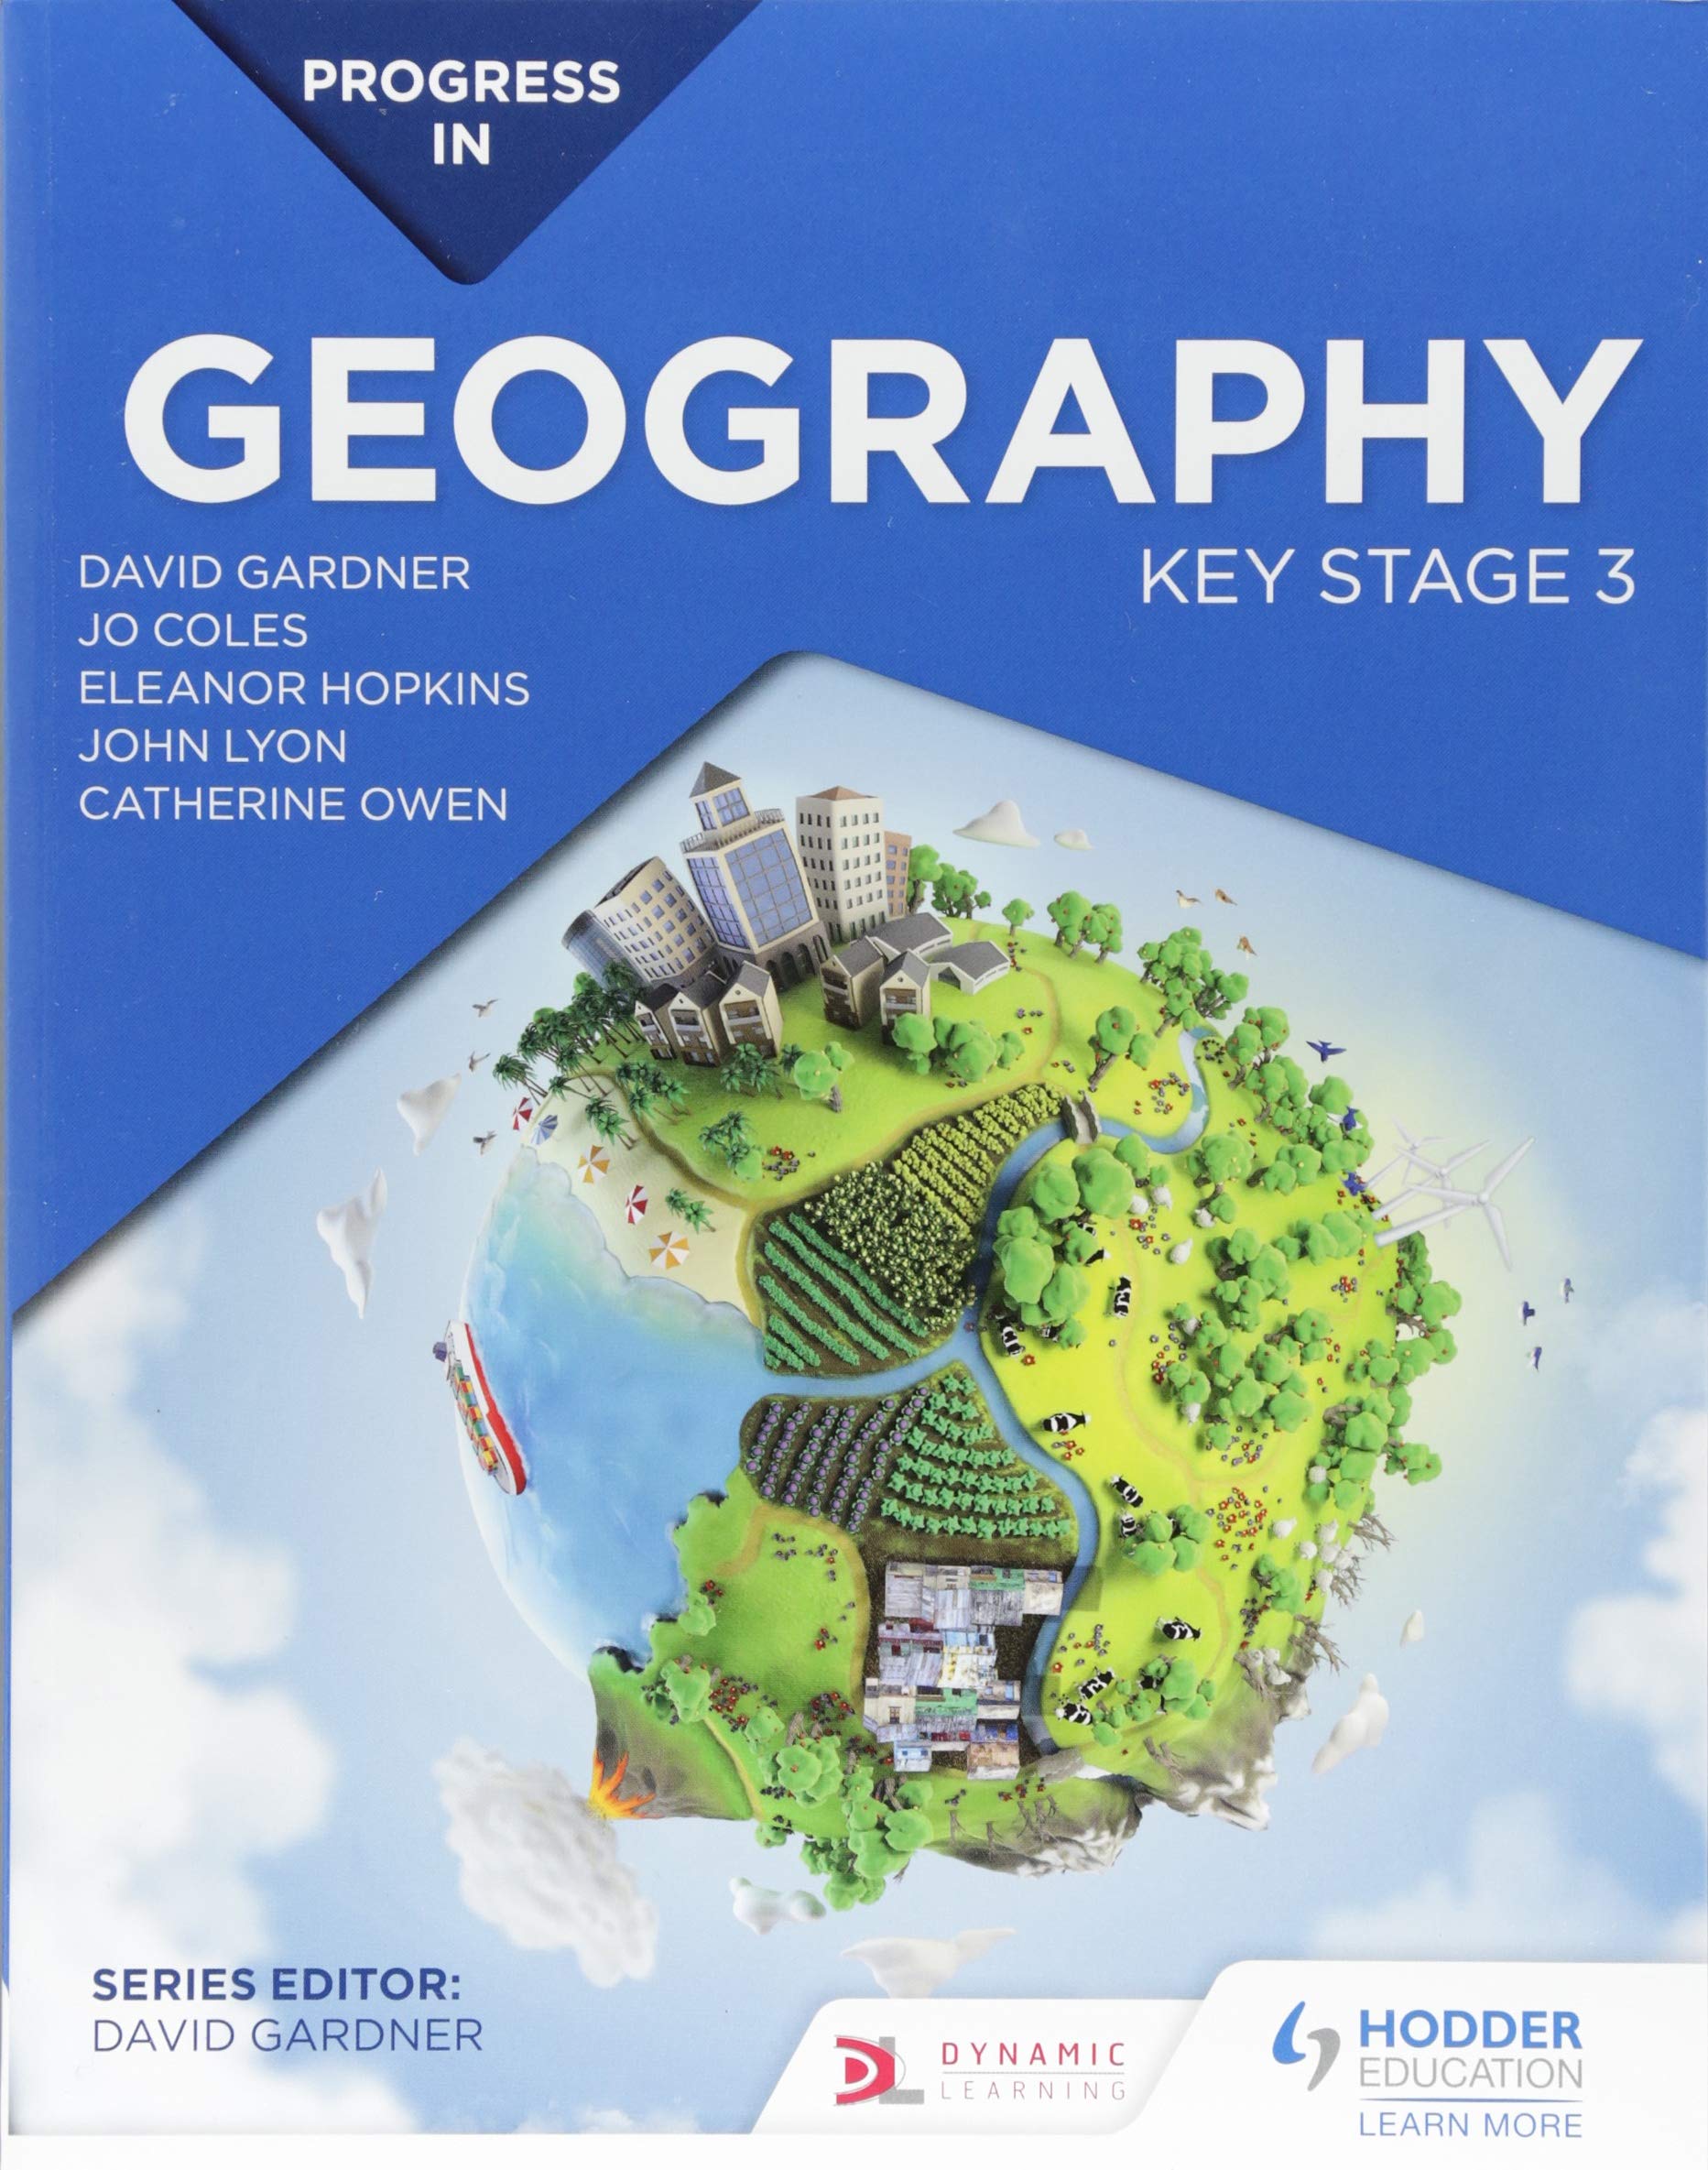 Progress in Geography - Key Stage 3